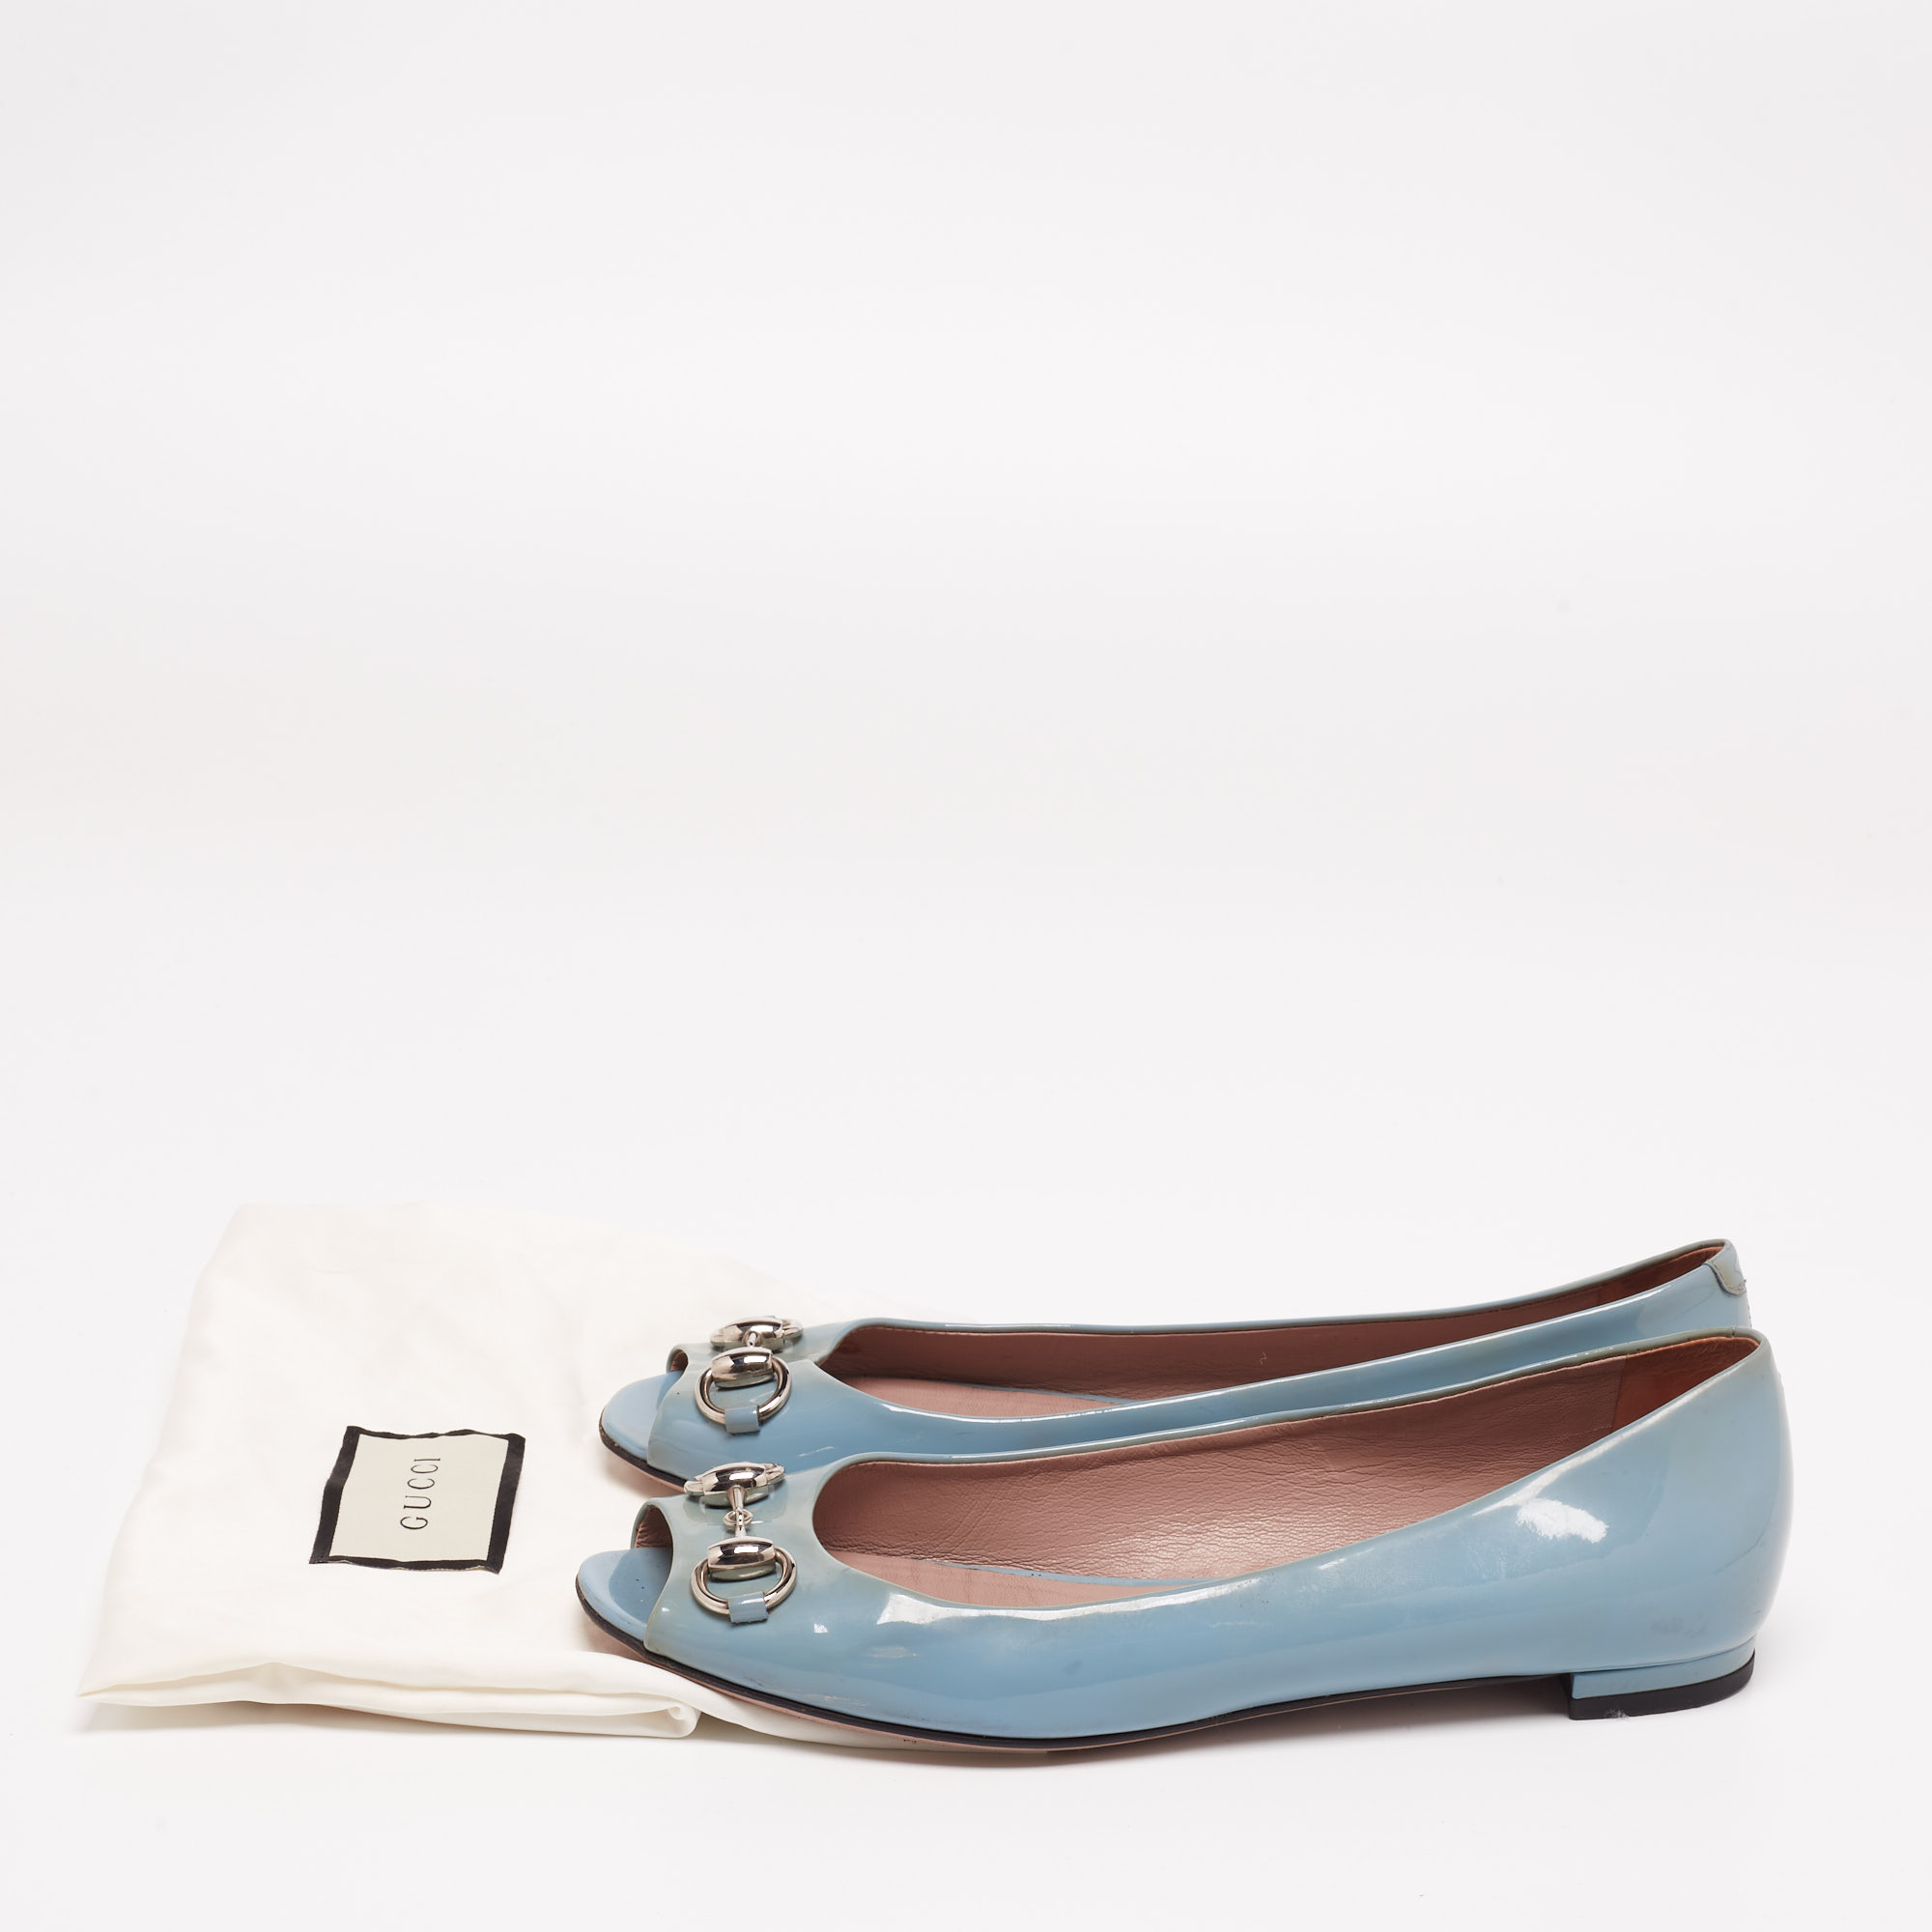 Gucci Grey Patent Leather Horsebit Peep Toe Ballet Flats Size 36.5